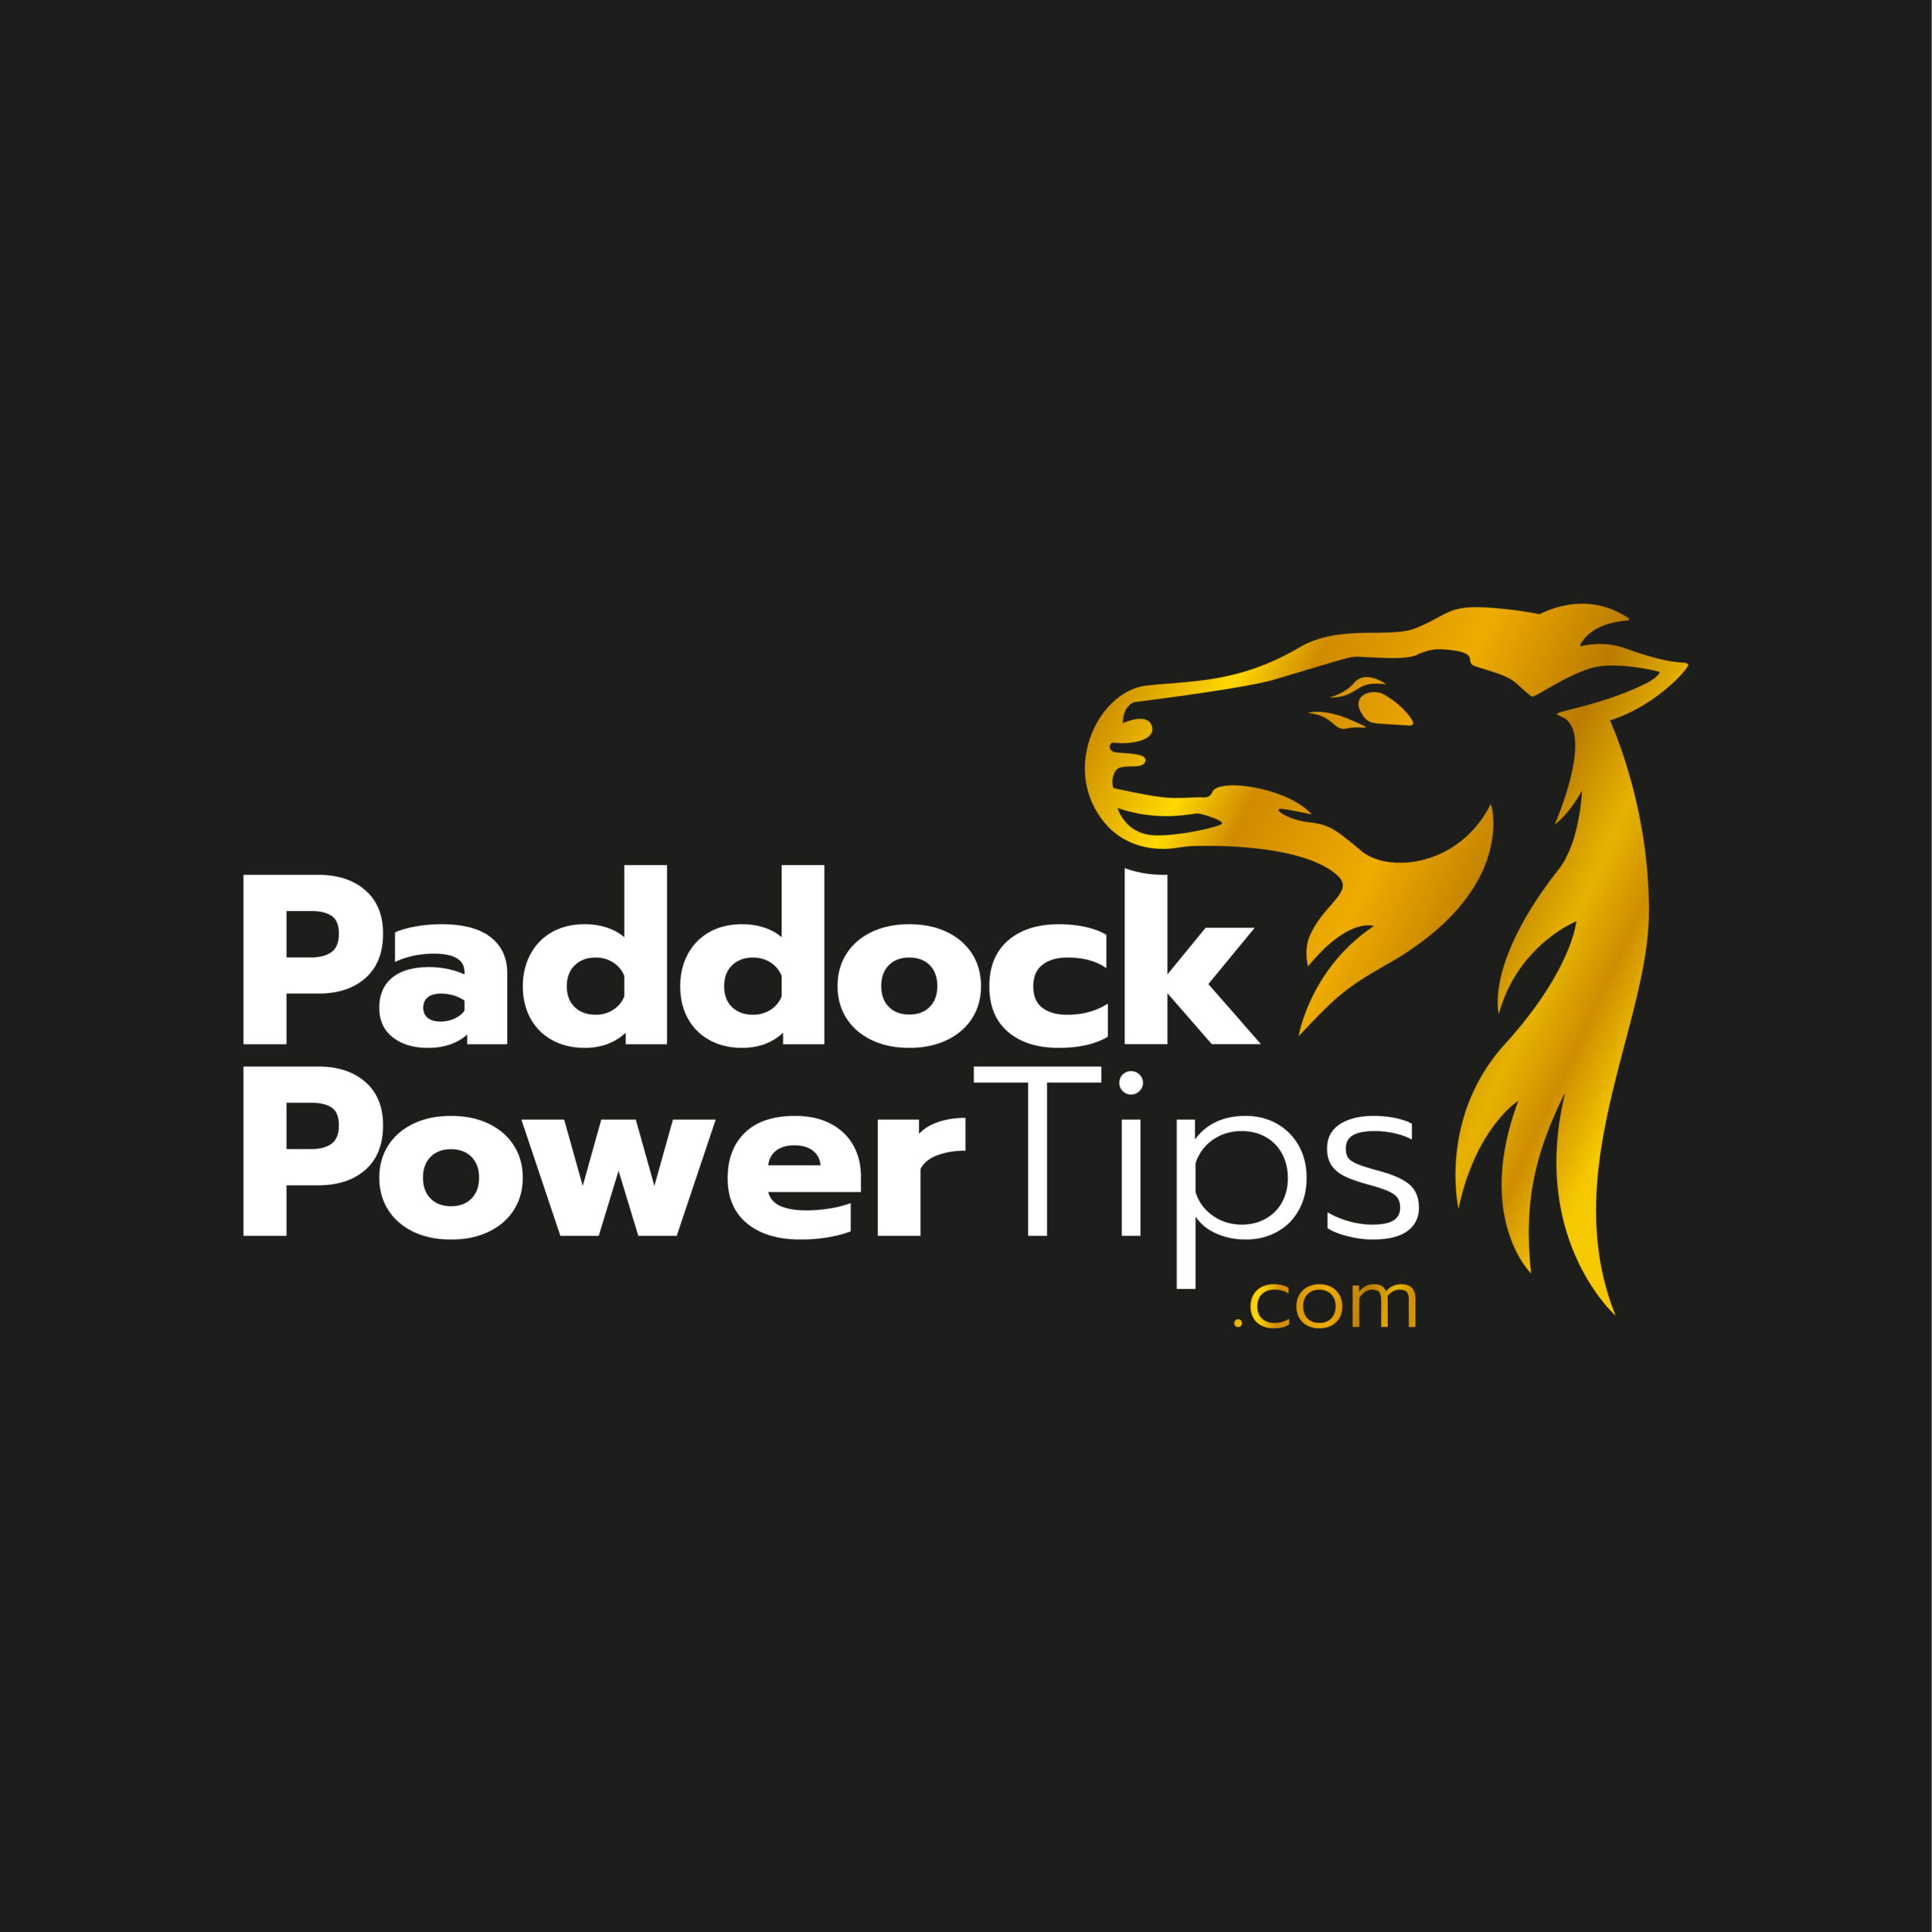 Paddock Power 